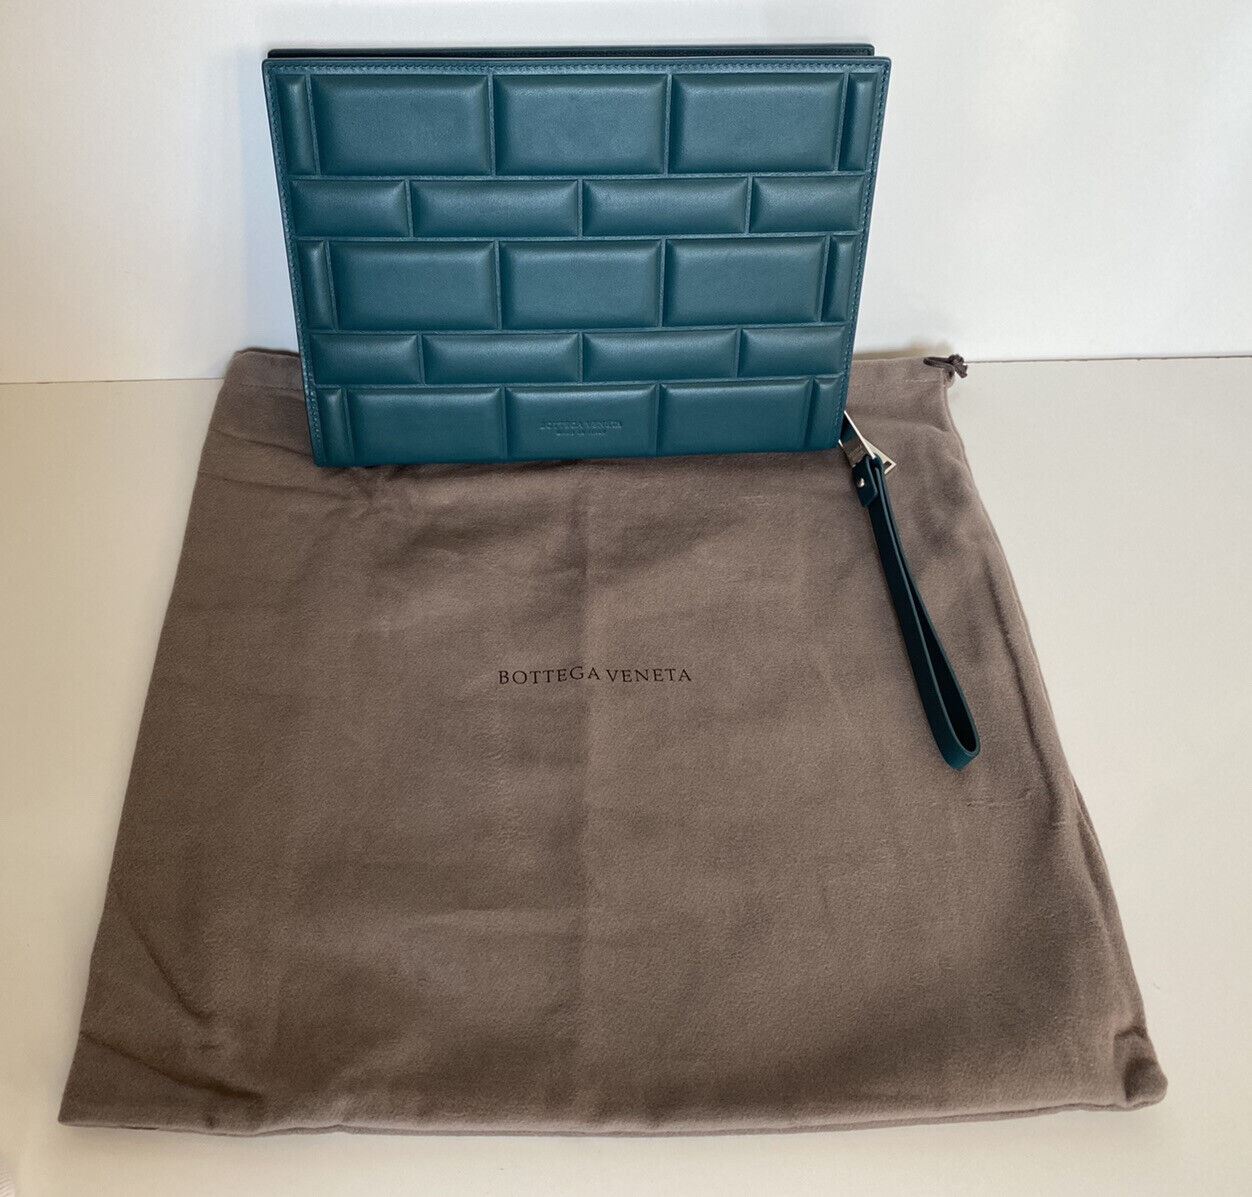 NWT $1900 Bottega Veneta Butter Calf Leather Document Case Green 592855